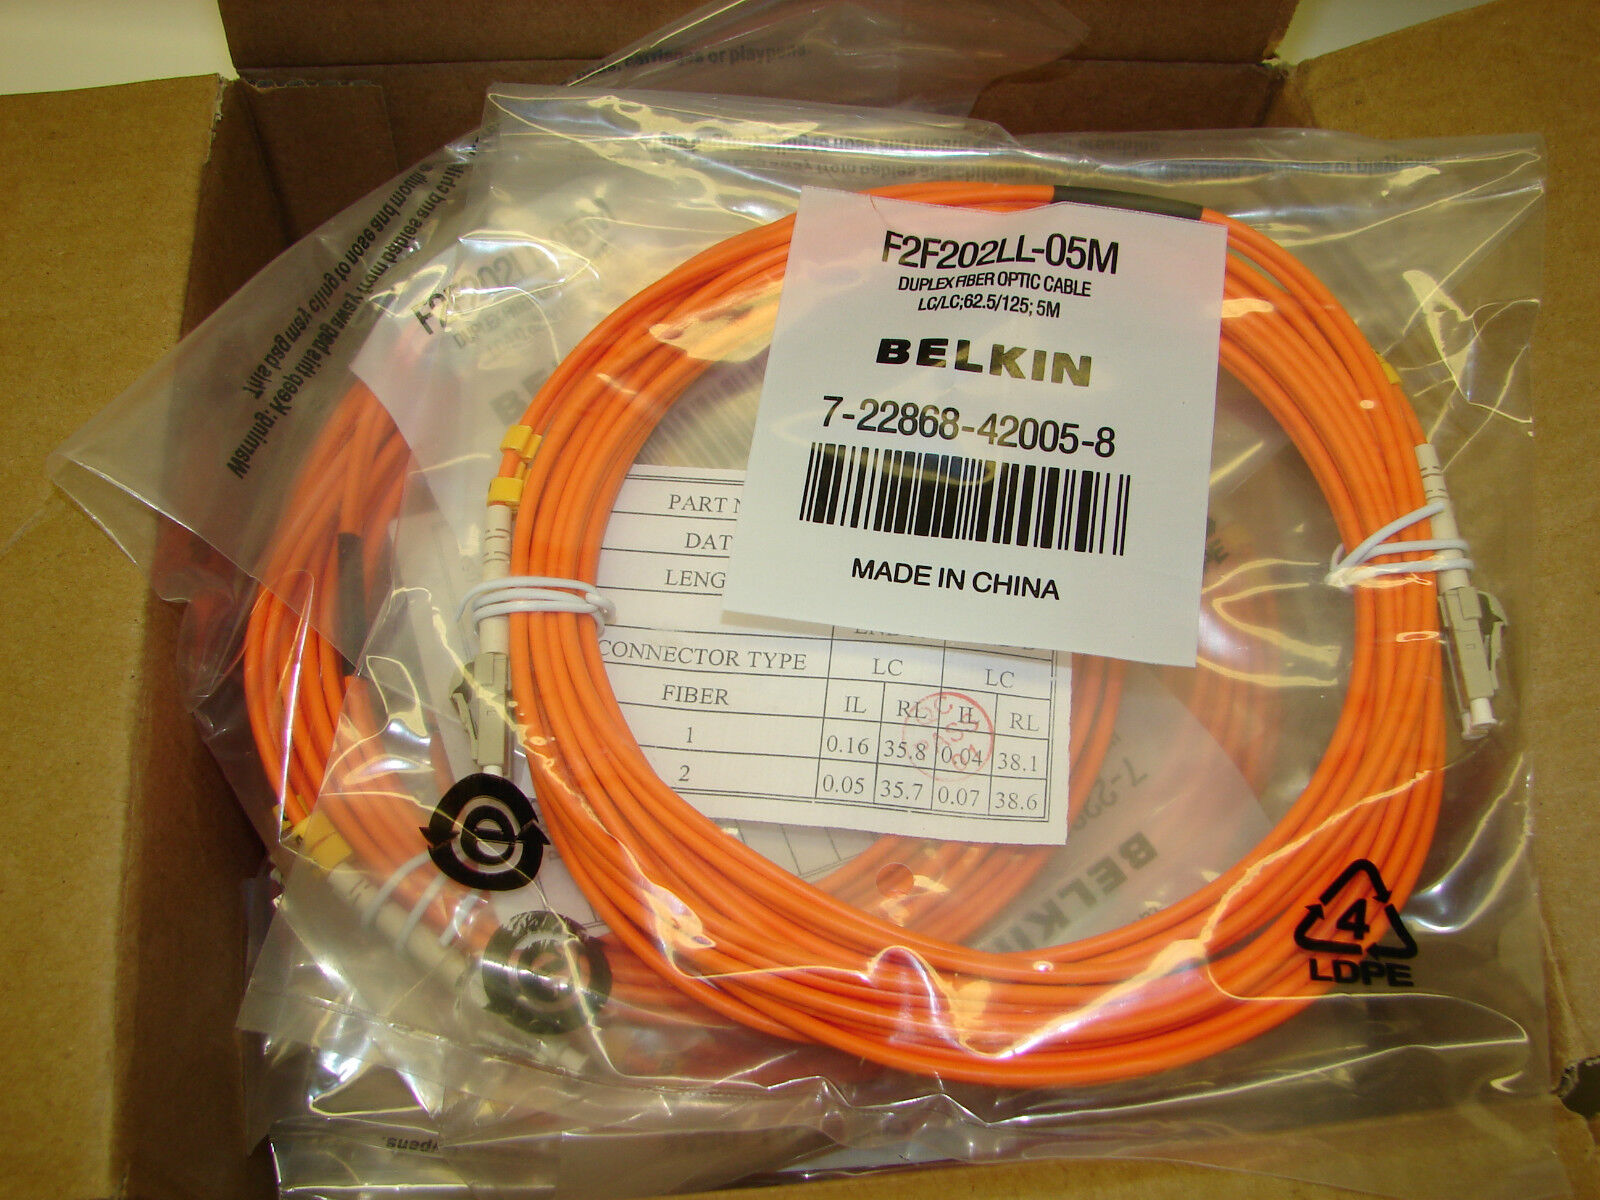 *NEW* Belkin Duplex Fiber Optic Patch Cable F2F202LL-05M (Qty - Box of 10)